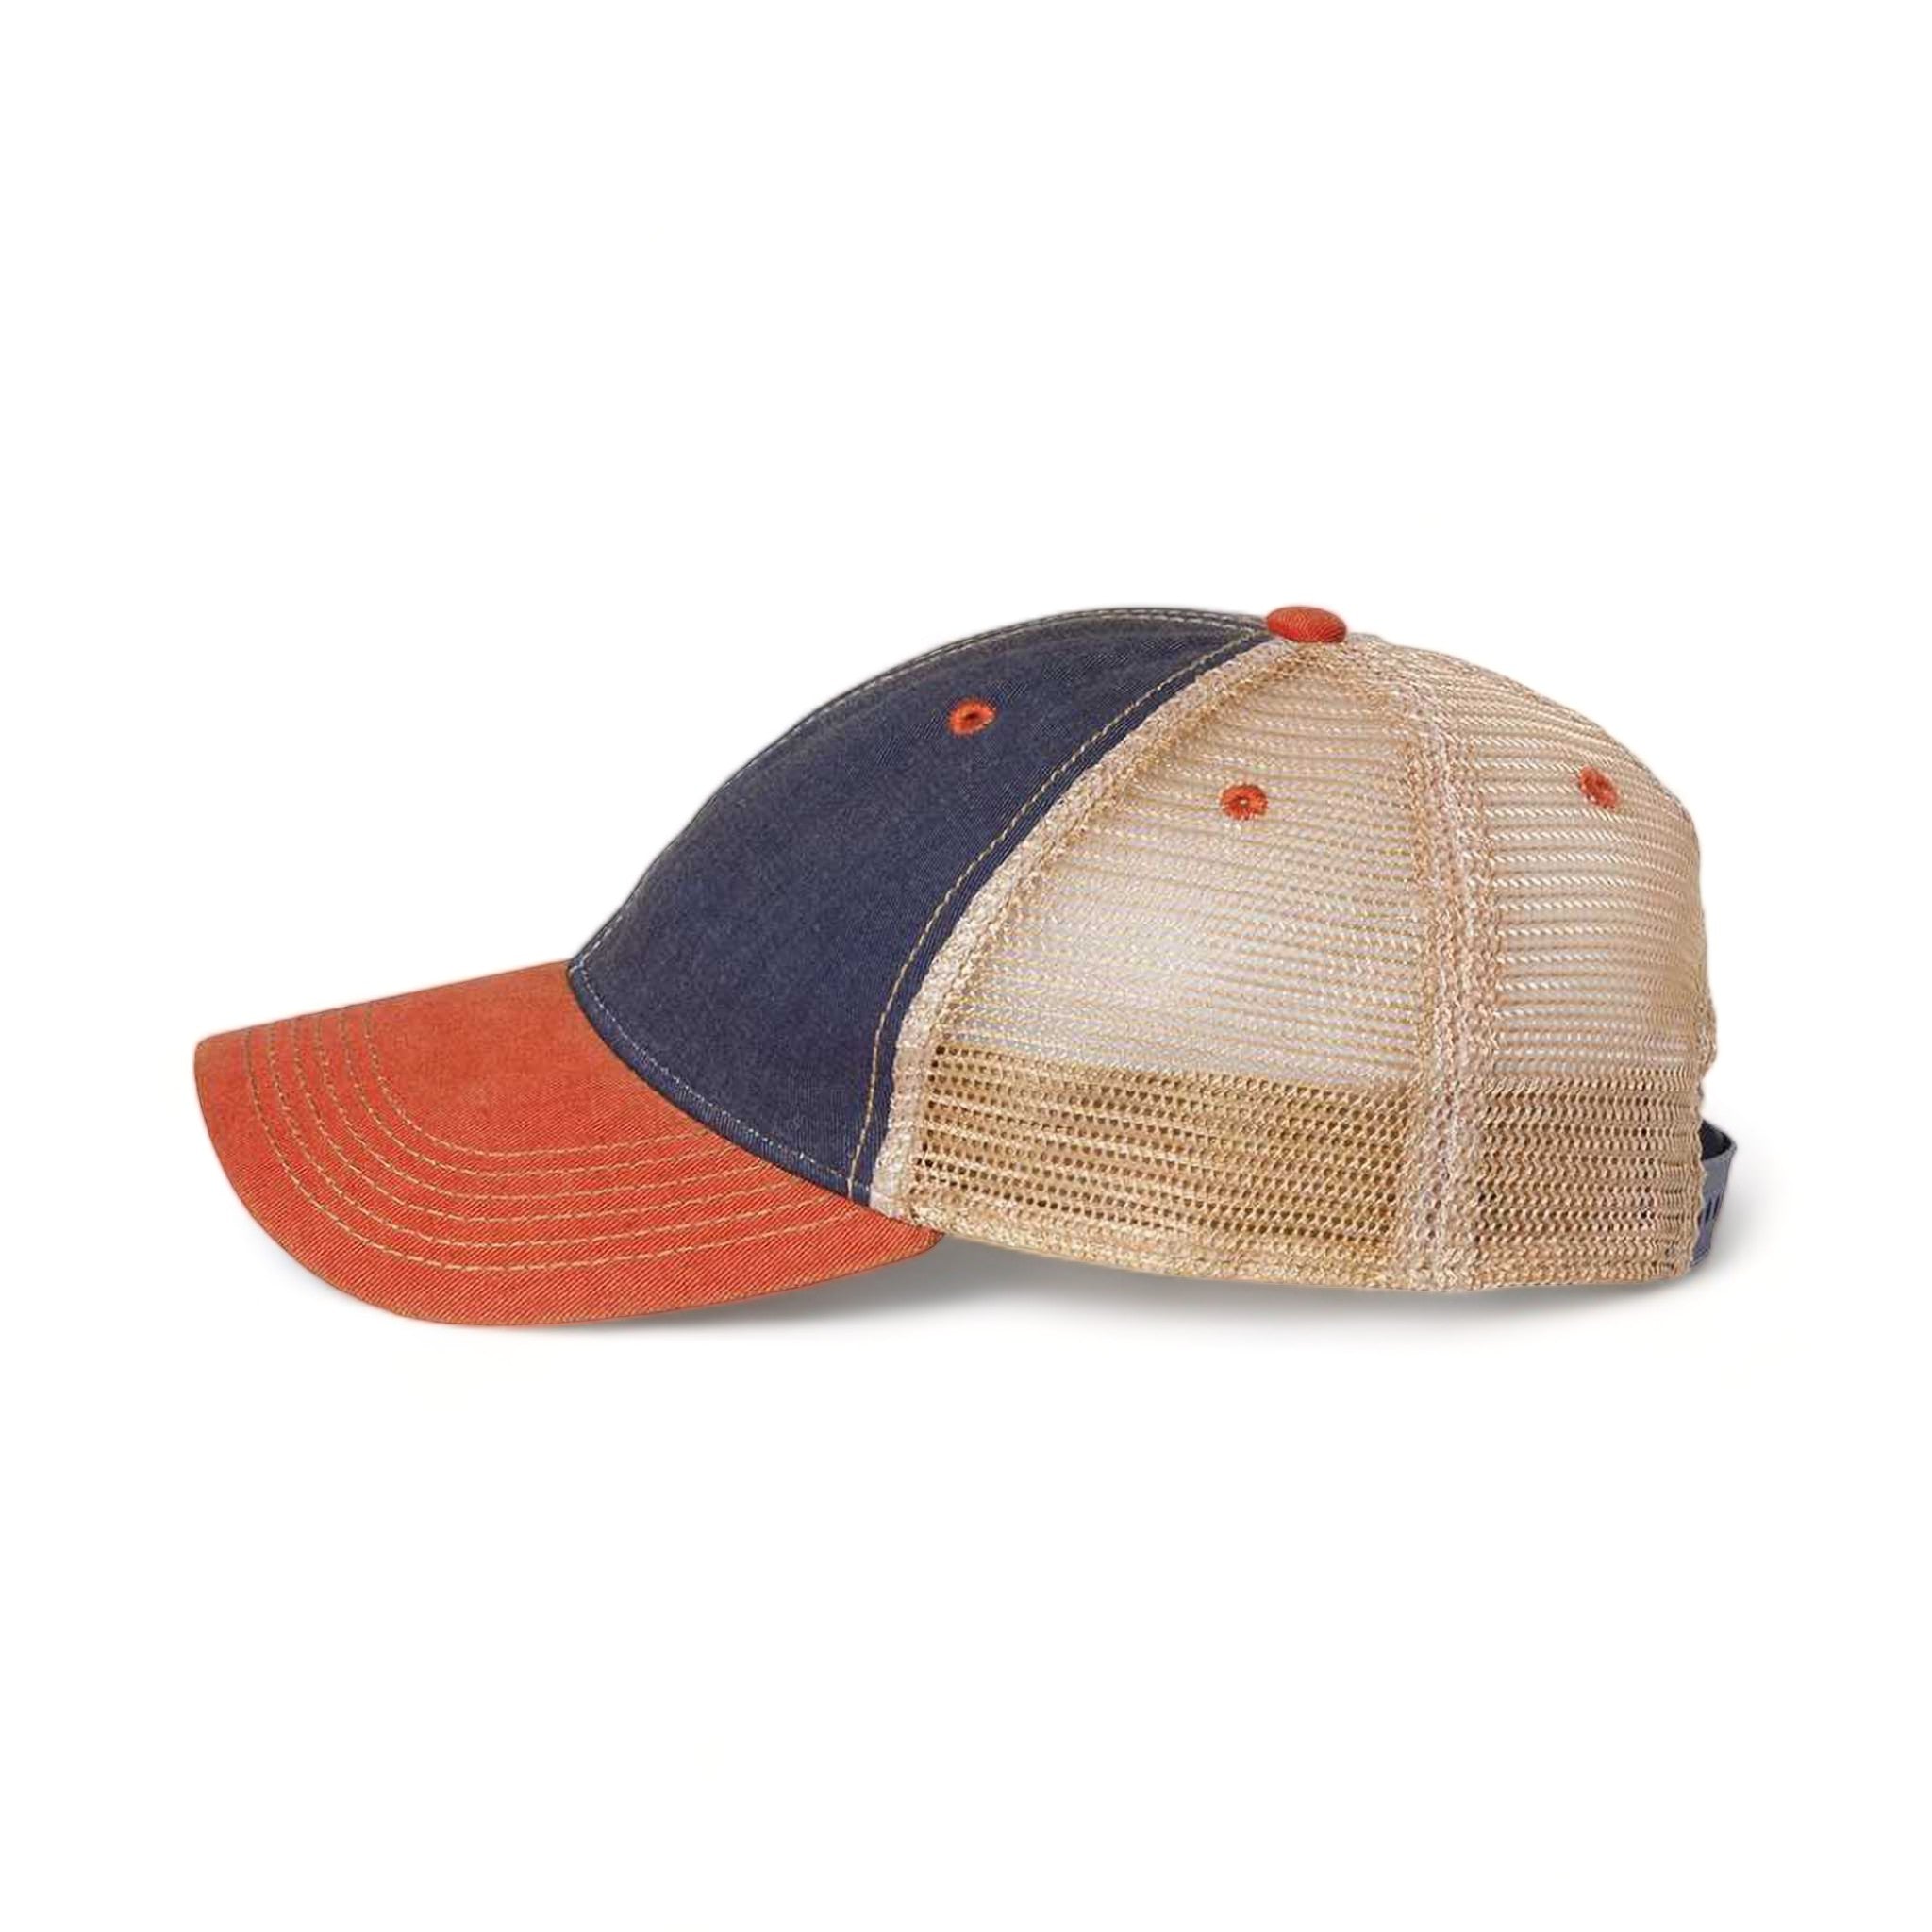 Side view of LEGACY OFA custom hat in navy, orange and khaki